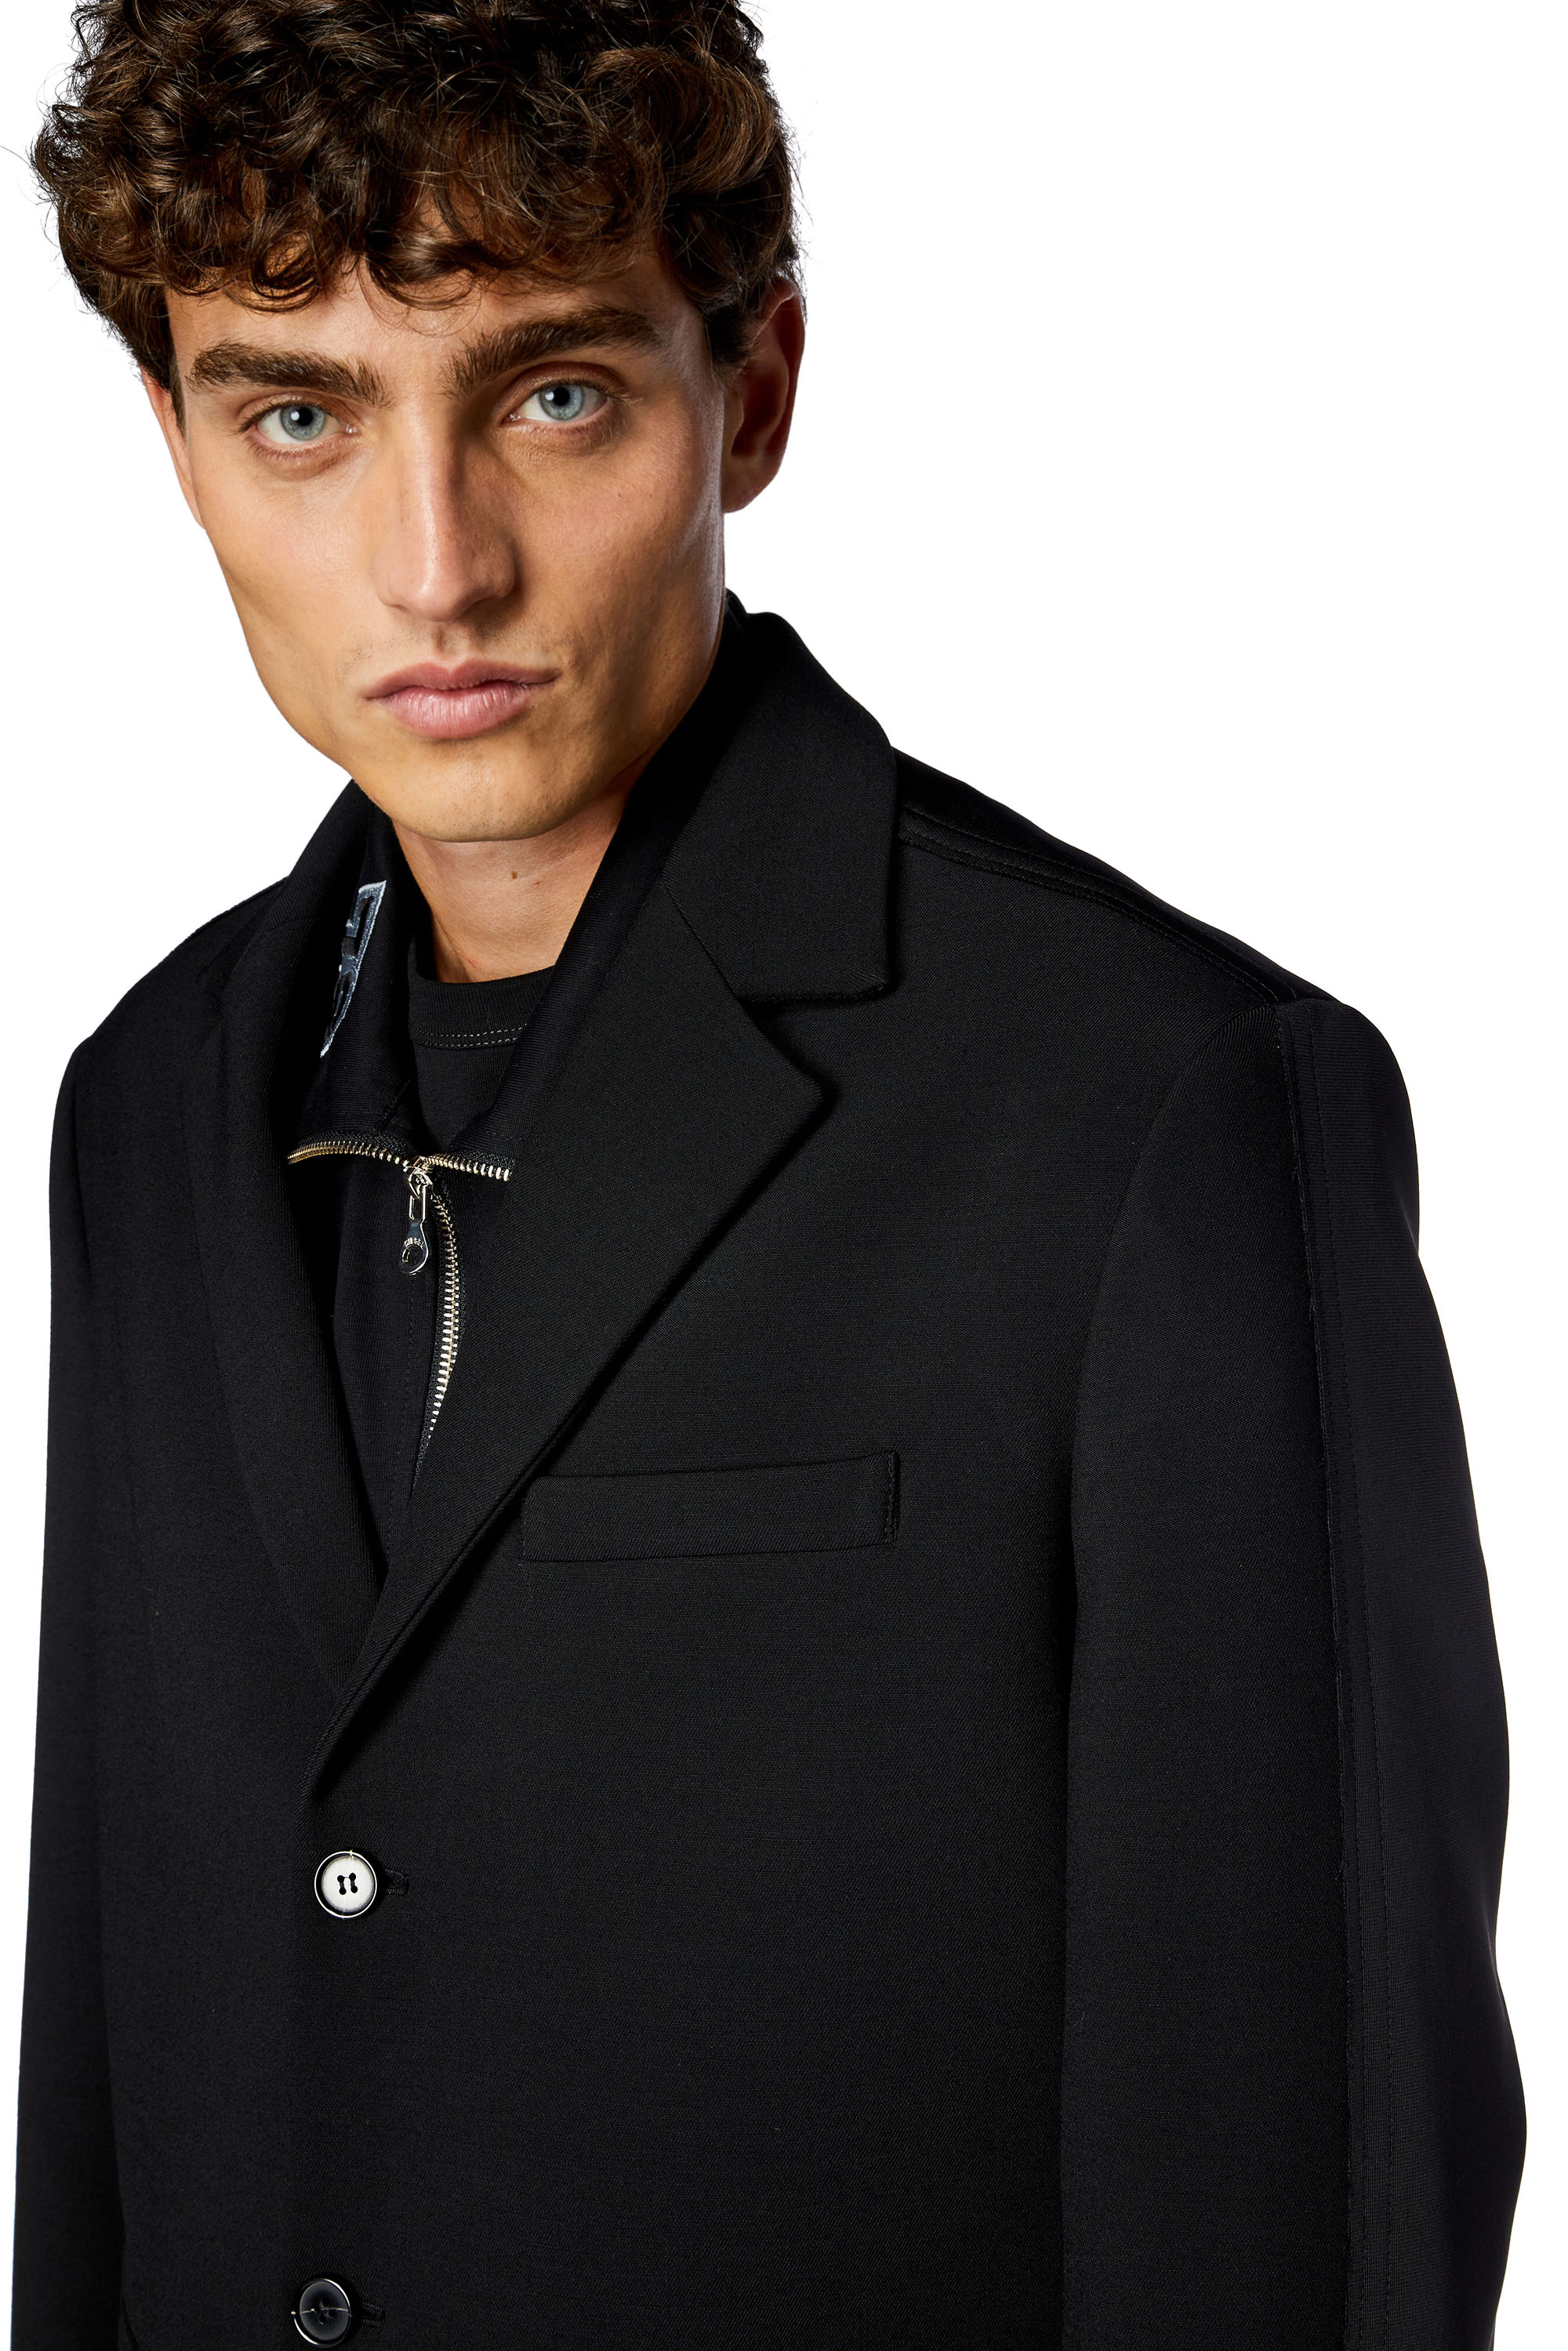 Diesel - J-DELLER, Man Hybrid coat in cool wool and jersey in Black - Image 5